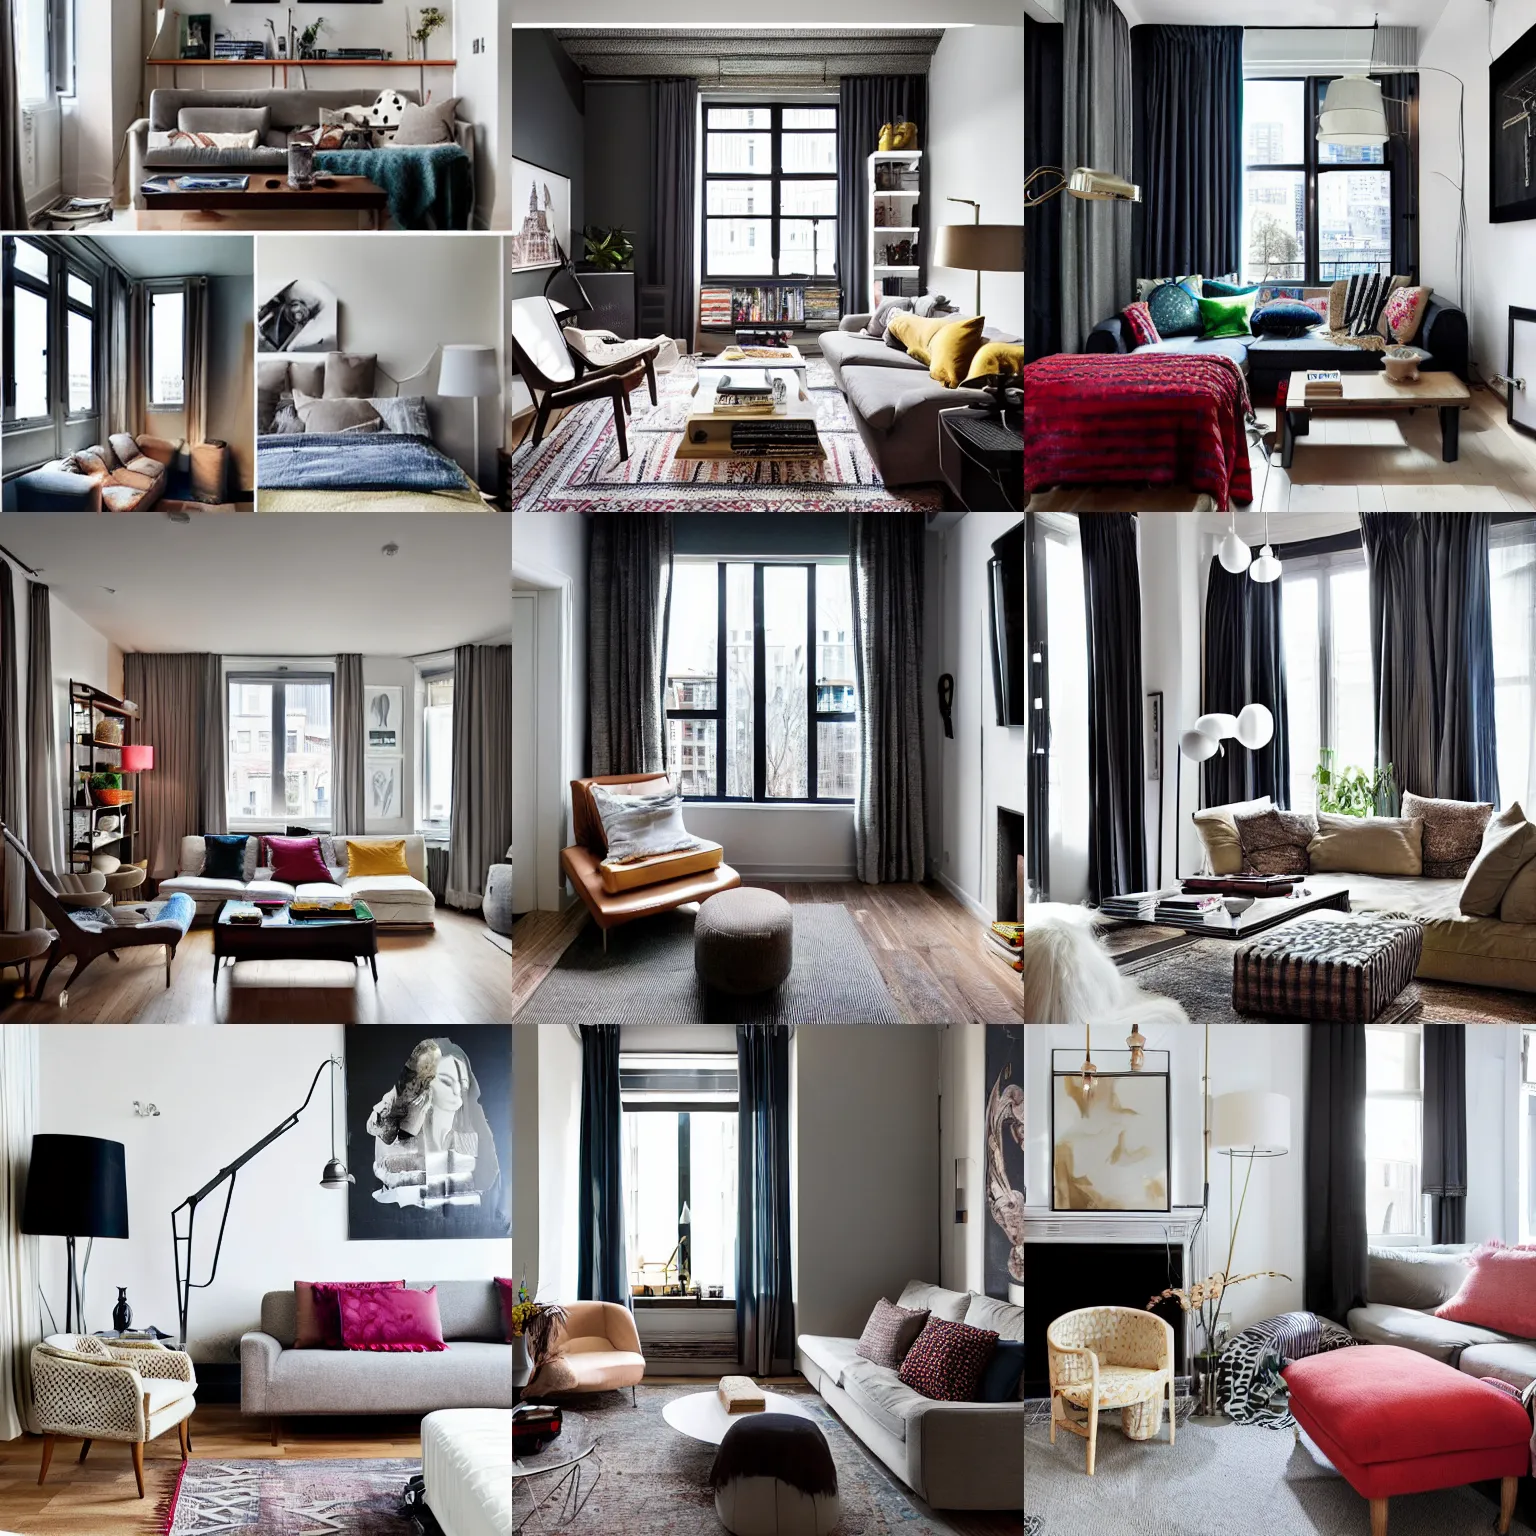 Prompt: award winning interior design city apartment, cozy, fabrics and textiles, photograph magazine